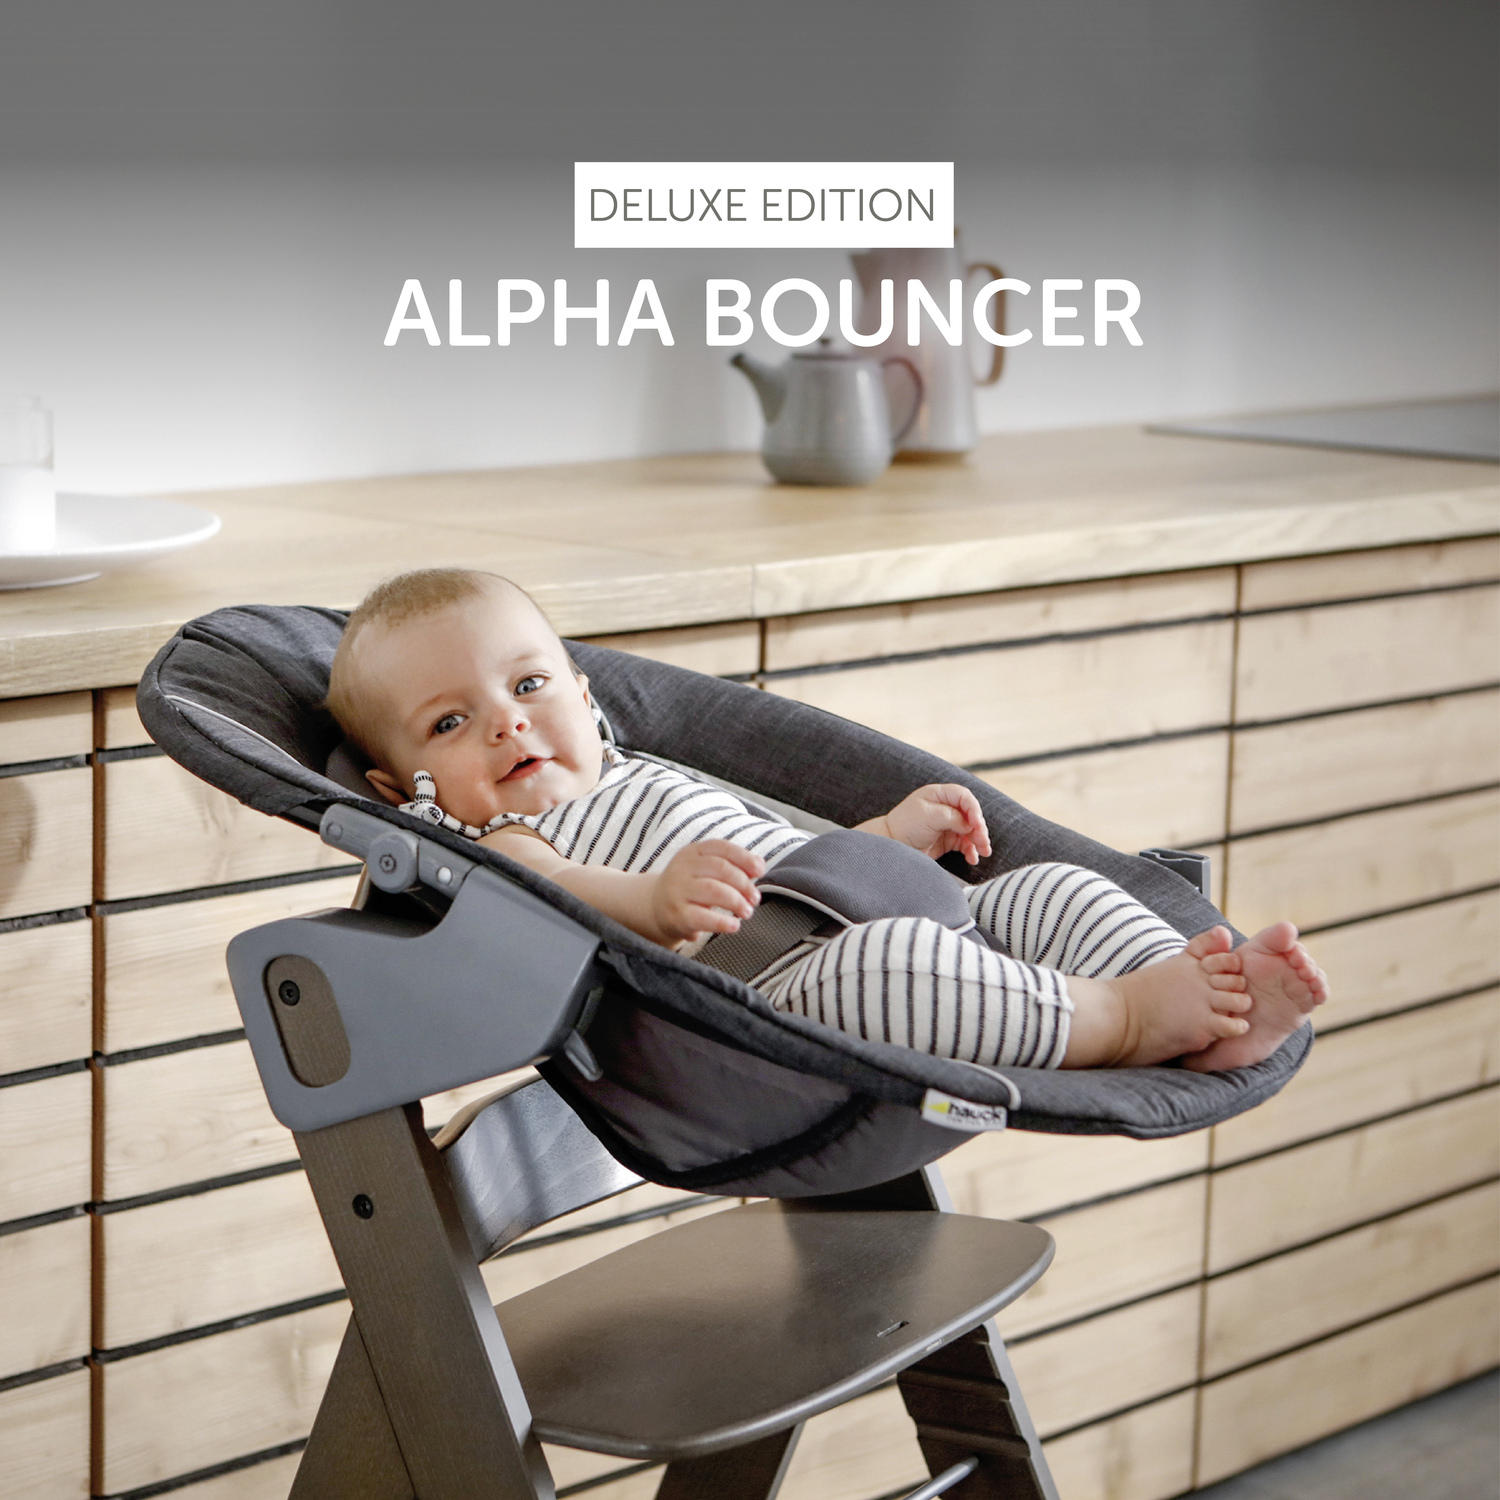 HOCHSTUHLLIEGE Alpha Bouncer Deluxe  - Weiß/Grau, Trend, Textil (66/49/45cm) - Hauck